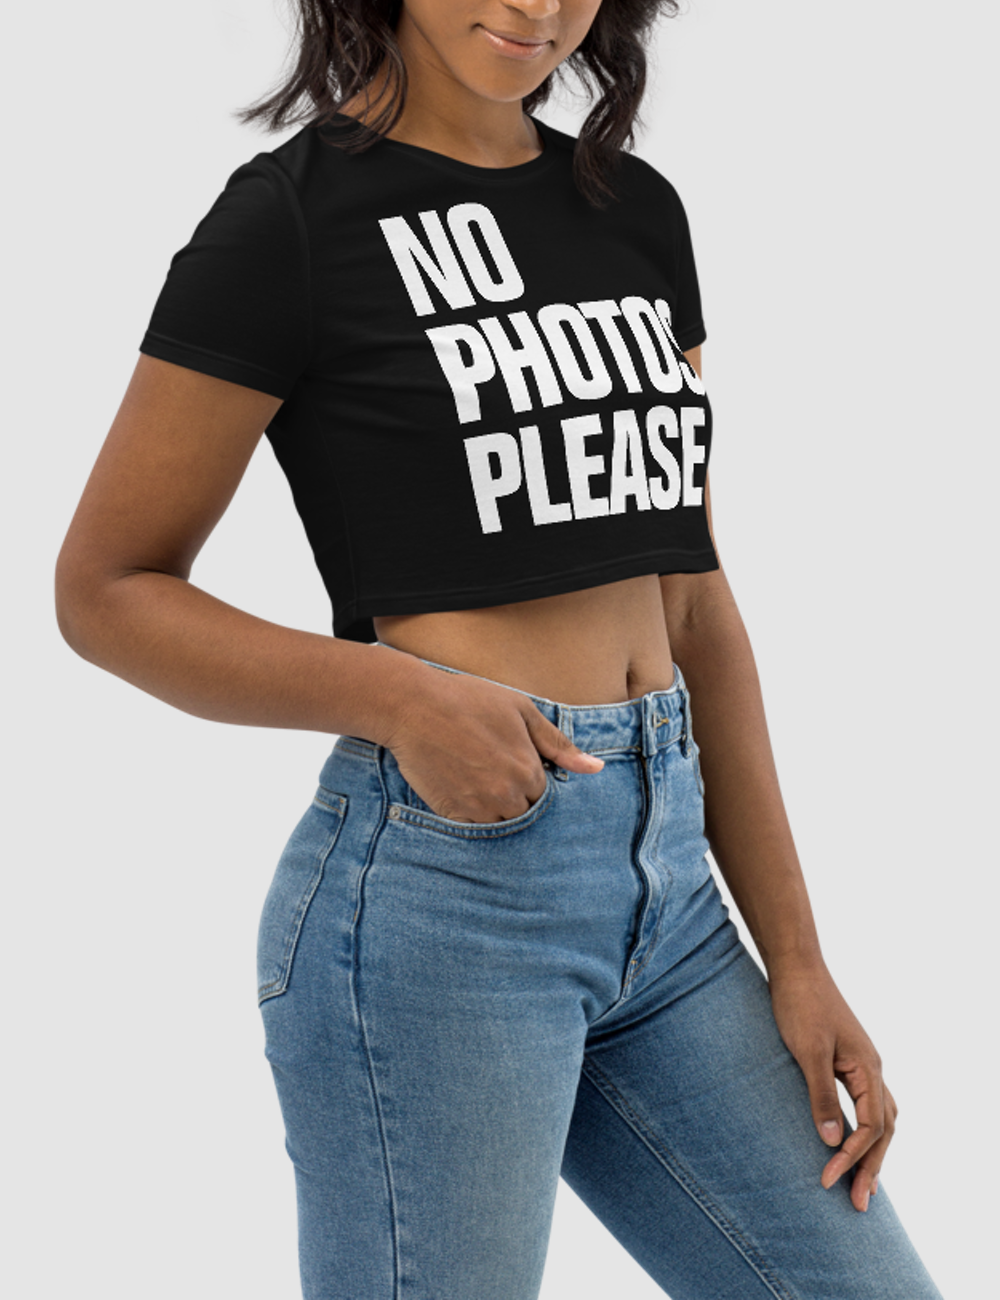 No Photos Please Women's Fitted Crop Top T-Shirt OniTakai